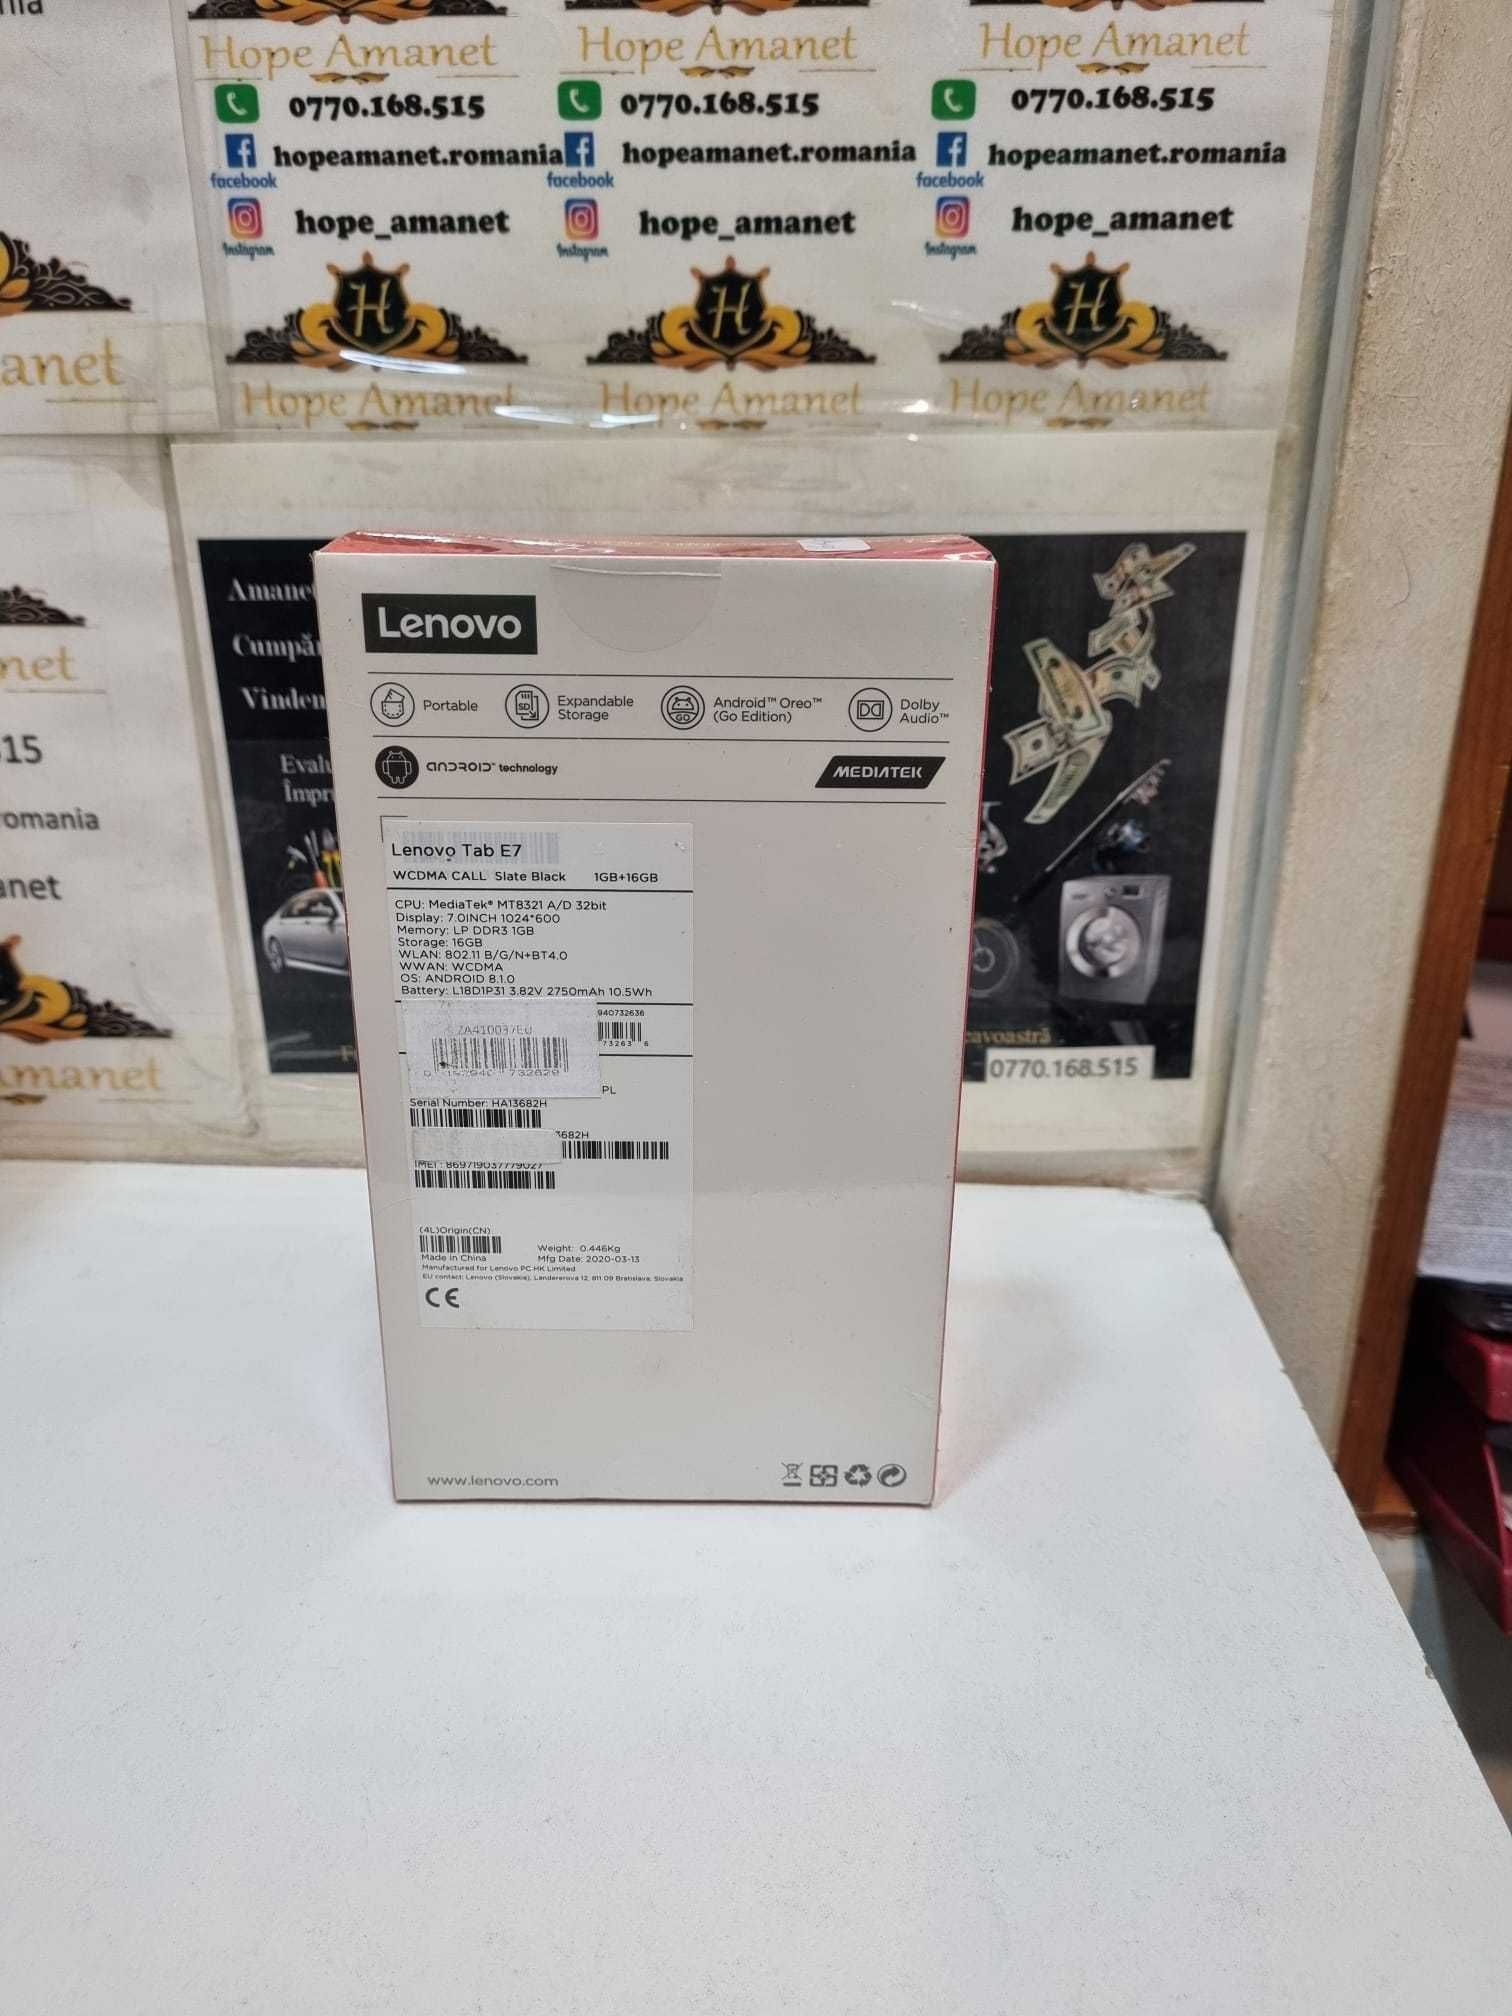 Hope Amanet P3 Lenovo Tab E7